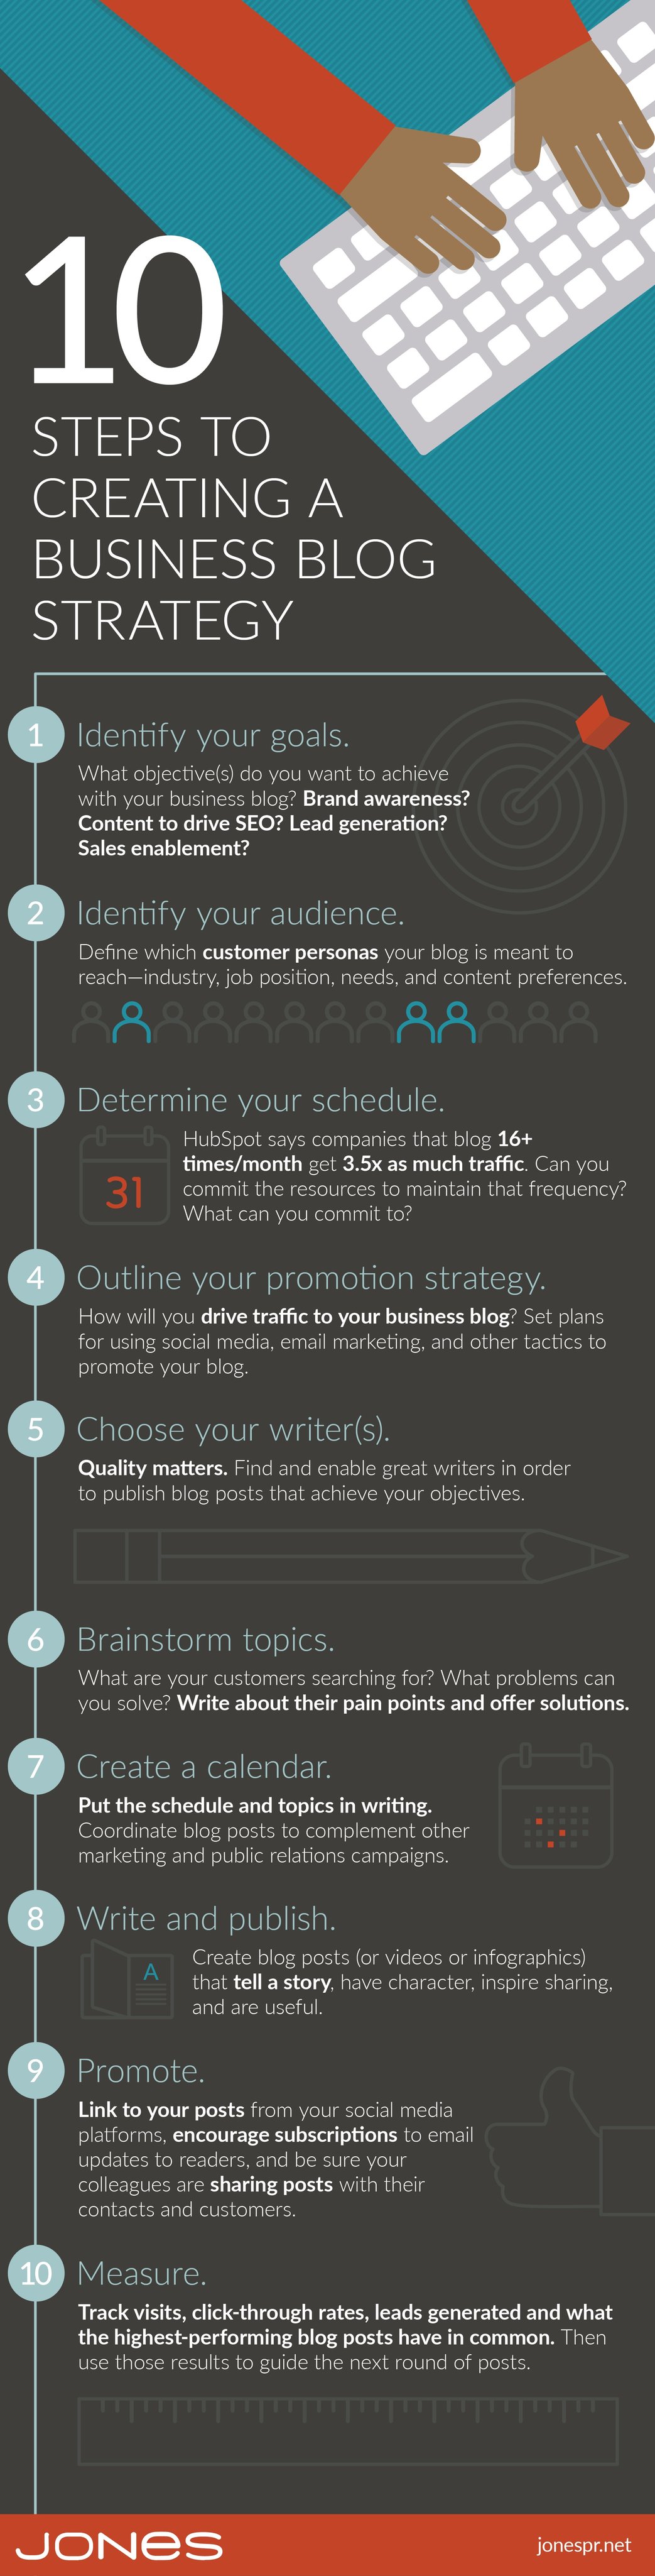 jones-infographic-create-business-blog-strategy-v3